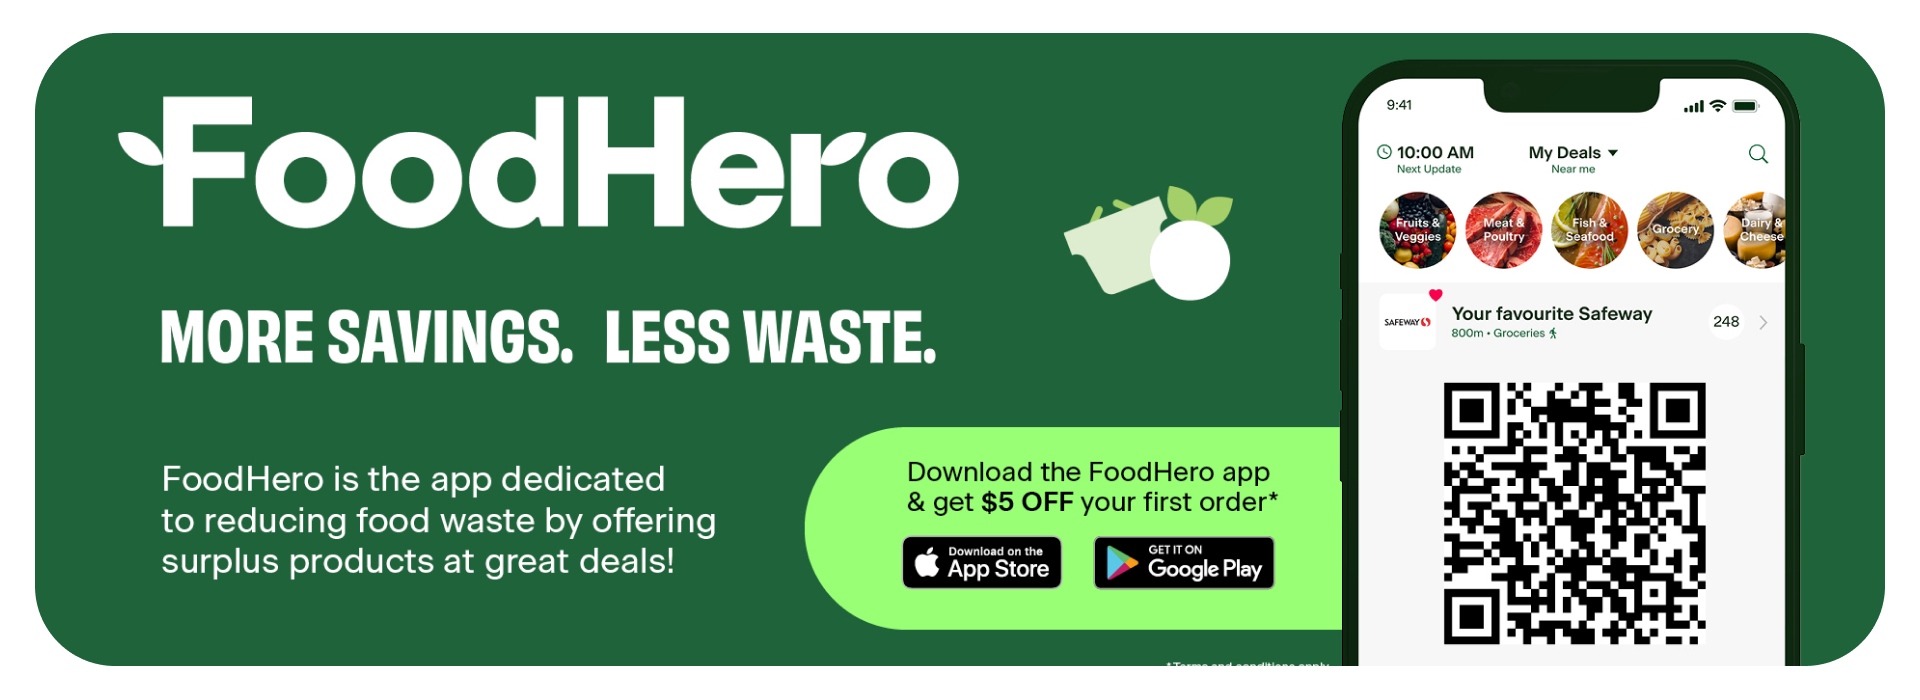 FoodHero - More Savings. Less Waste. FoodHero is the app dedicated to reducing food waste by offering surplus products at great deals!